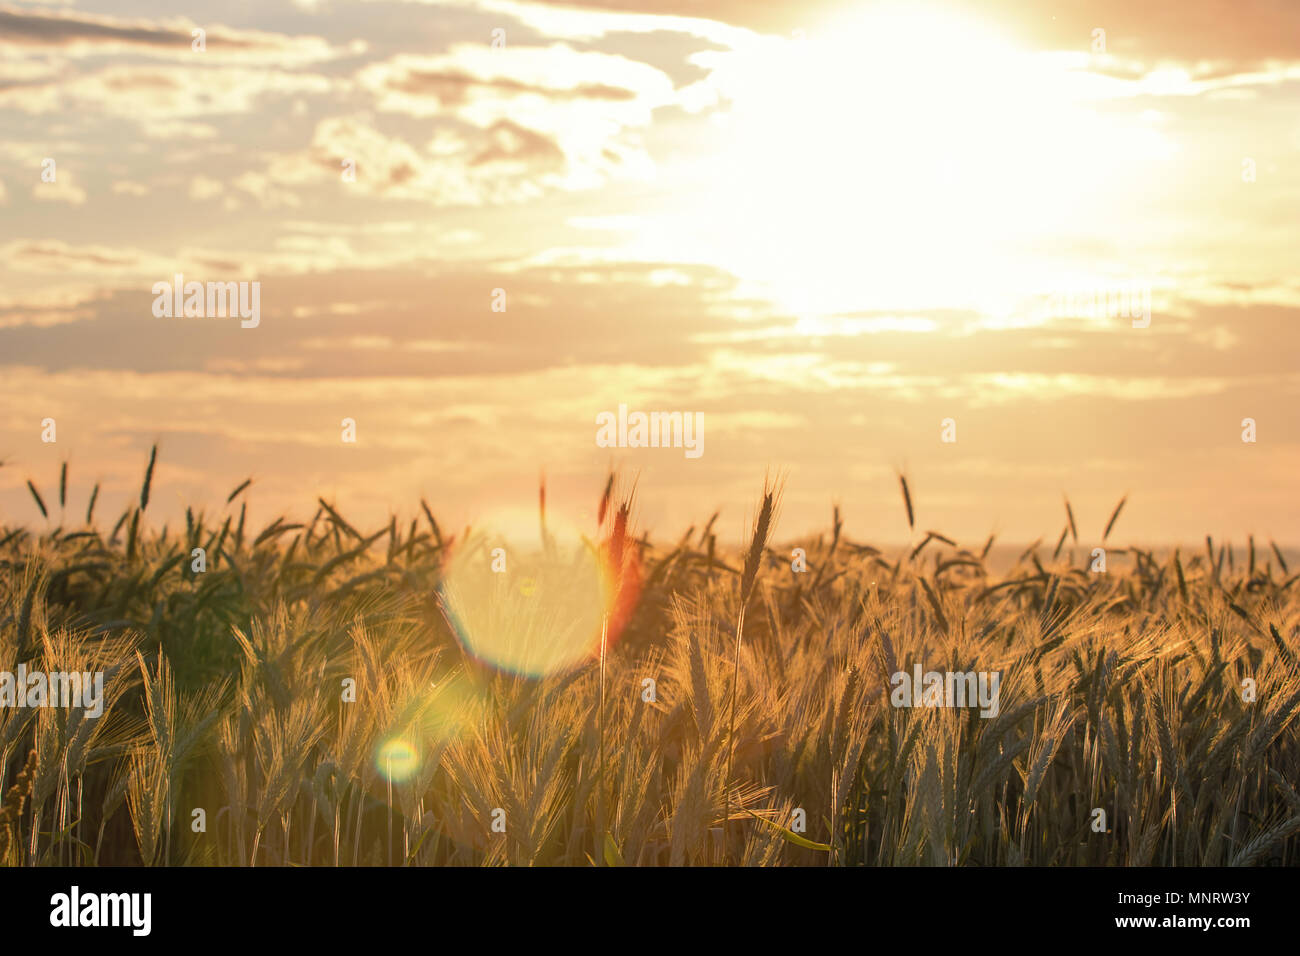 Wheat ears under the sunshine. Sun shining through ripe wheat. Stock Photo